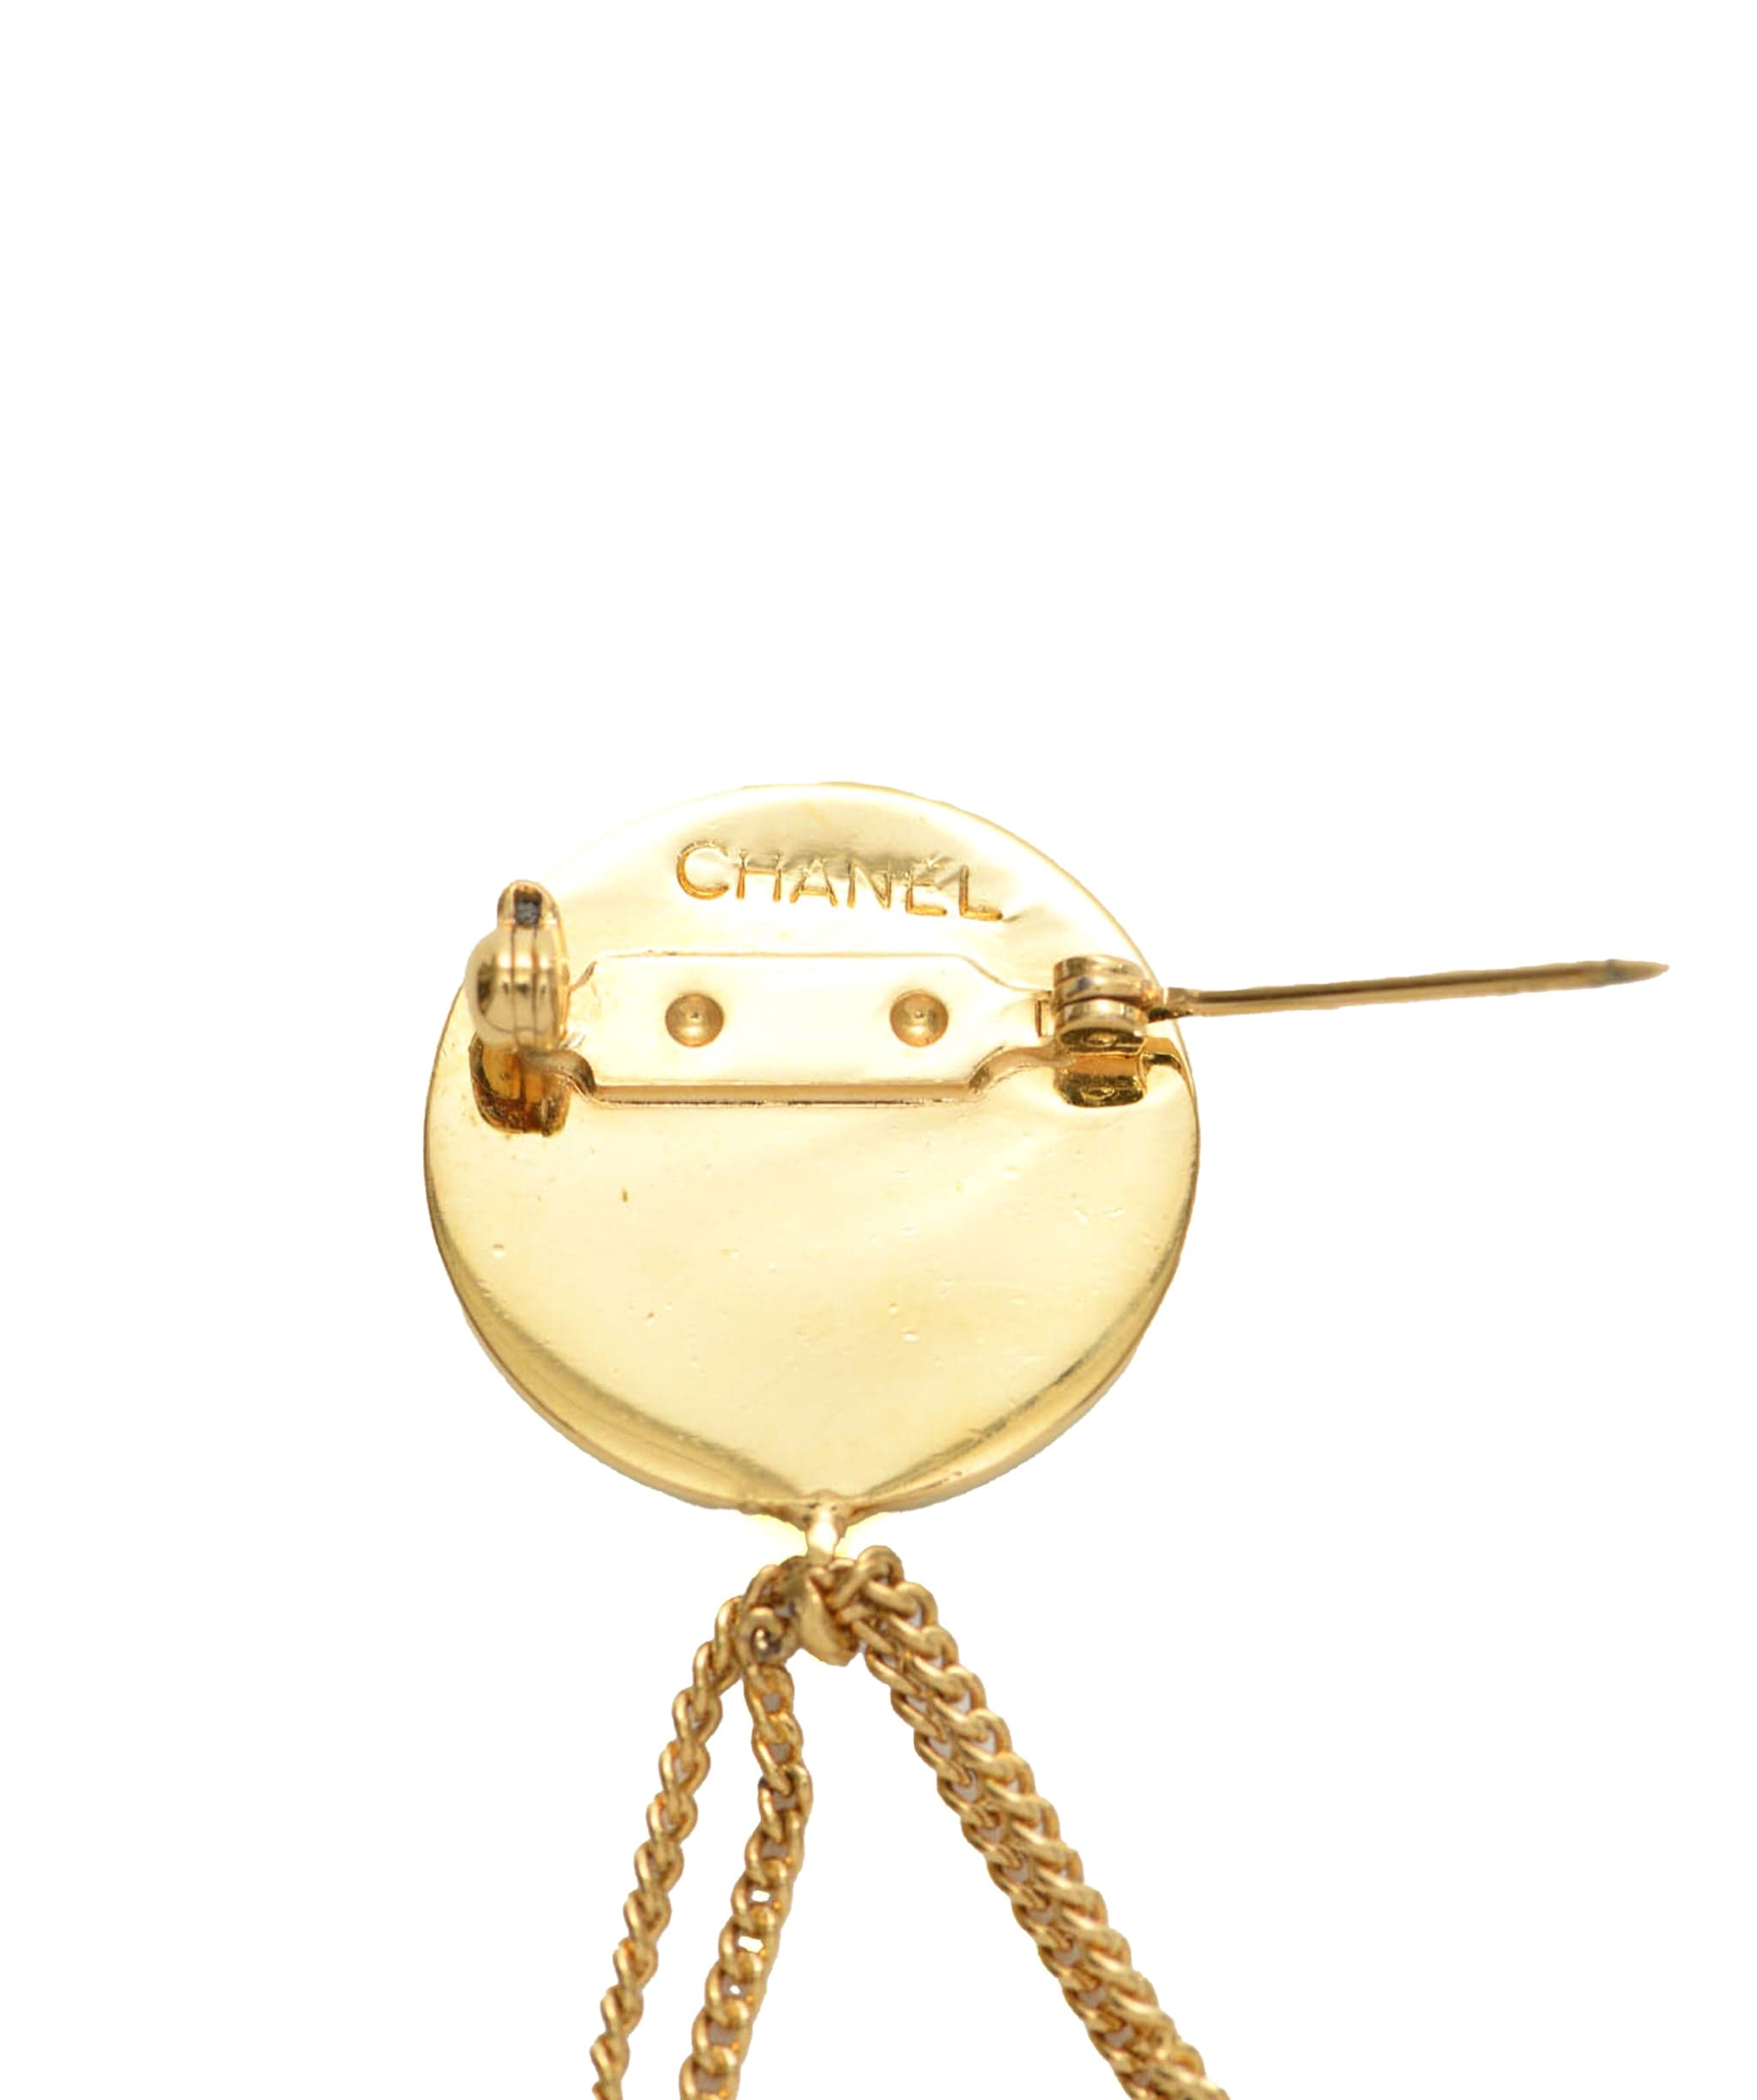 Chanel Chanel bag design brooch - AWC1710